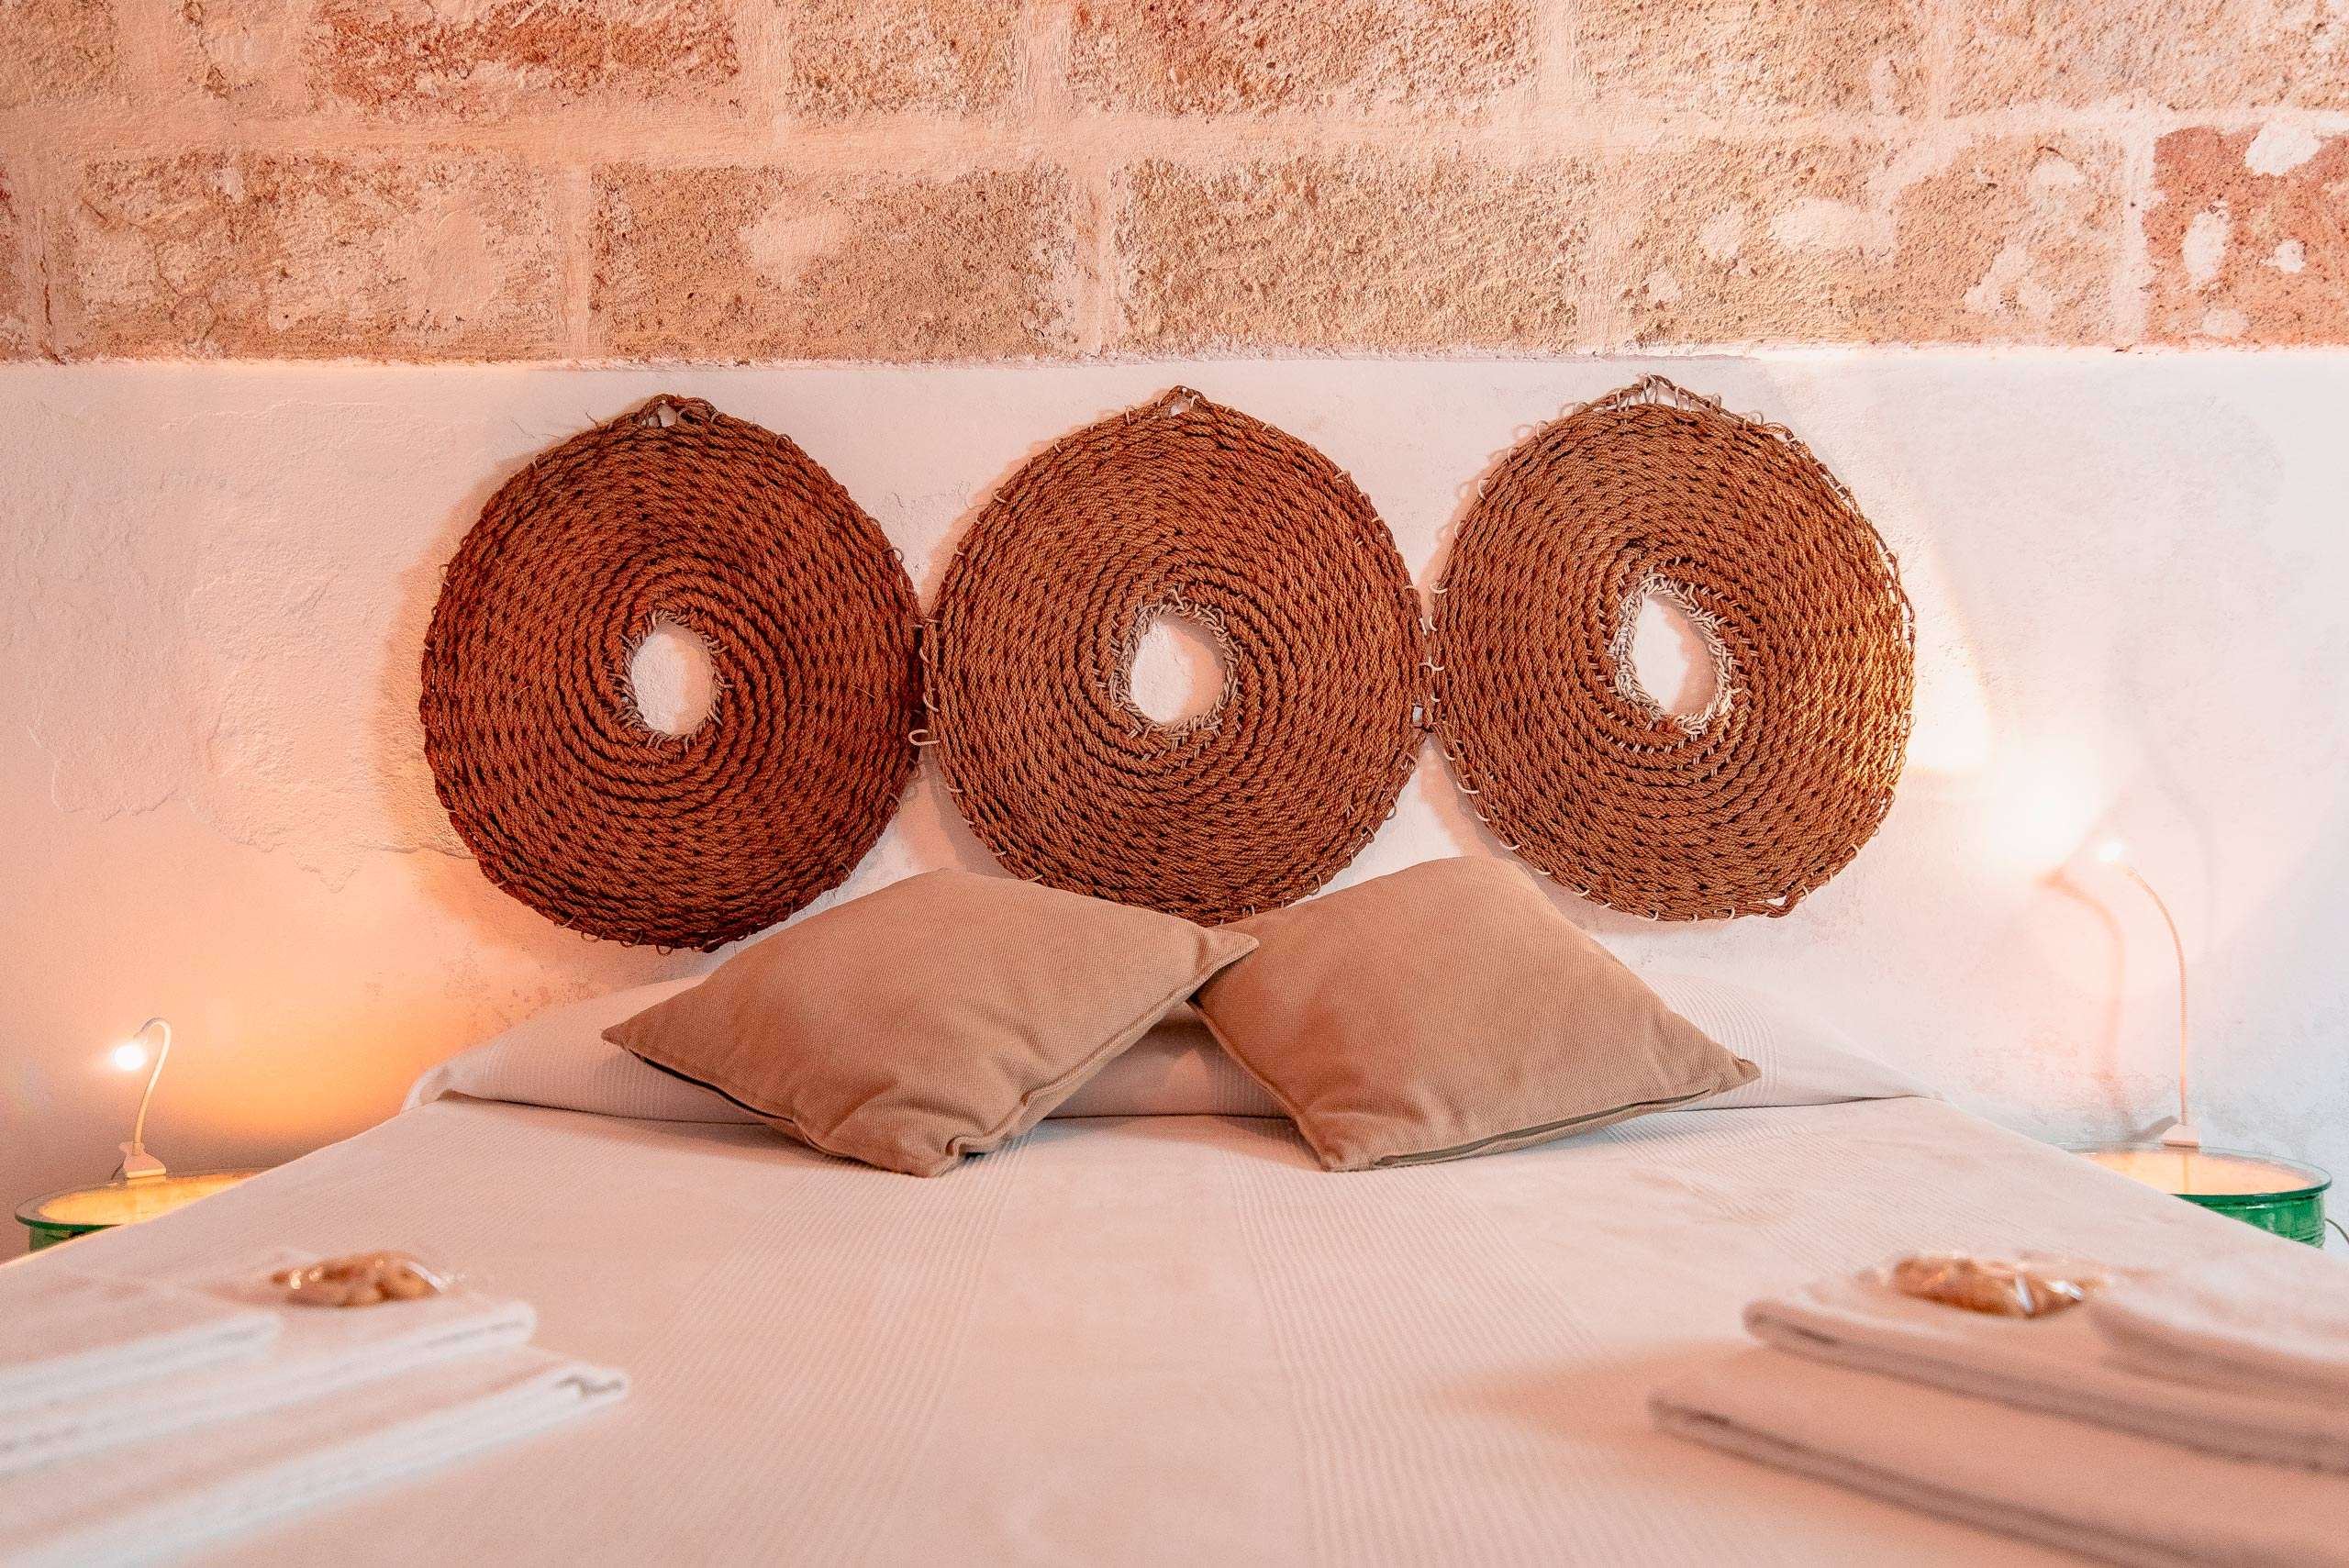 A bedroom at Masseria Spina Resort in Puglia